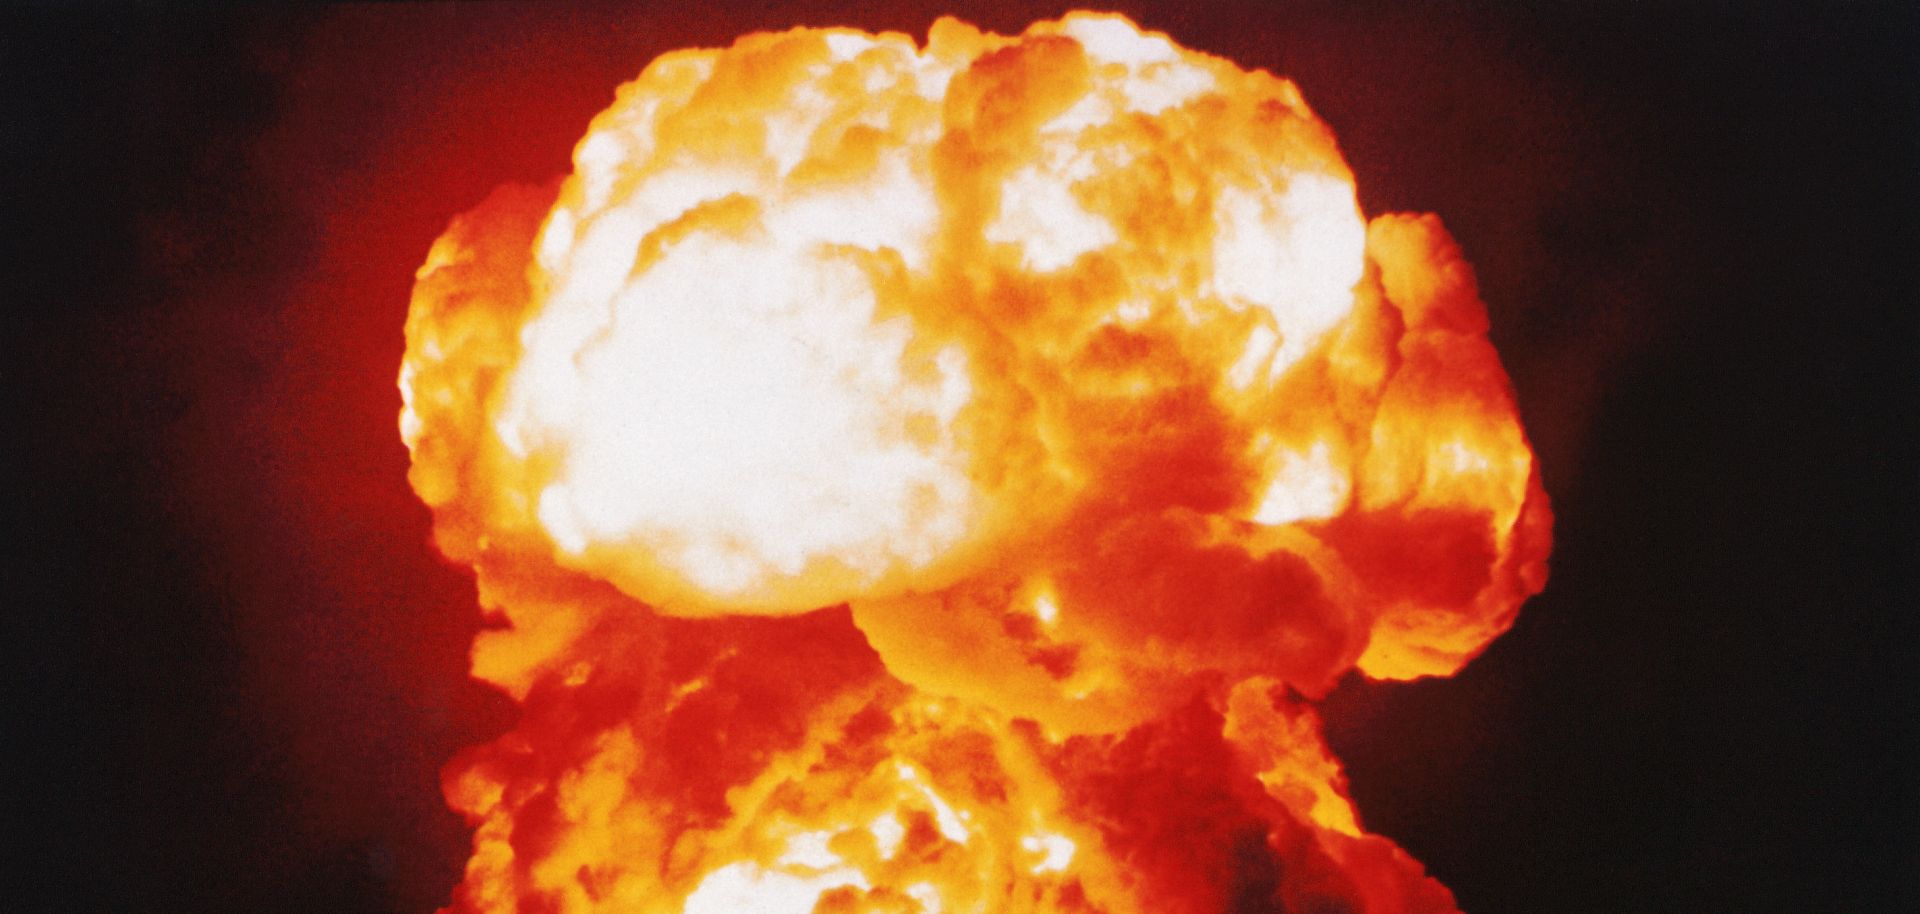 The United States detonates an atomic bomb nicknamed "Smokey" as part of Operation PLUMBBOB in the Nevada desert in 1957.